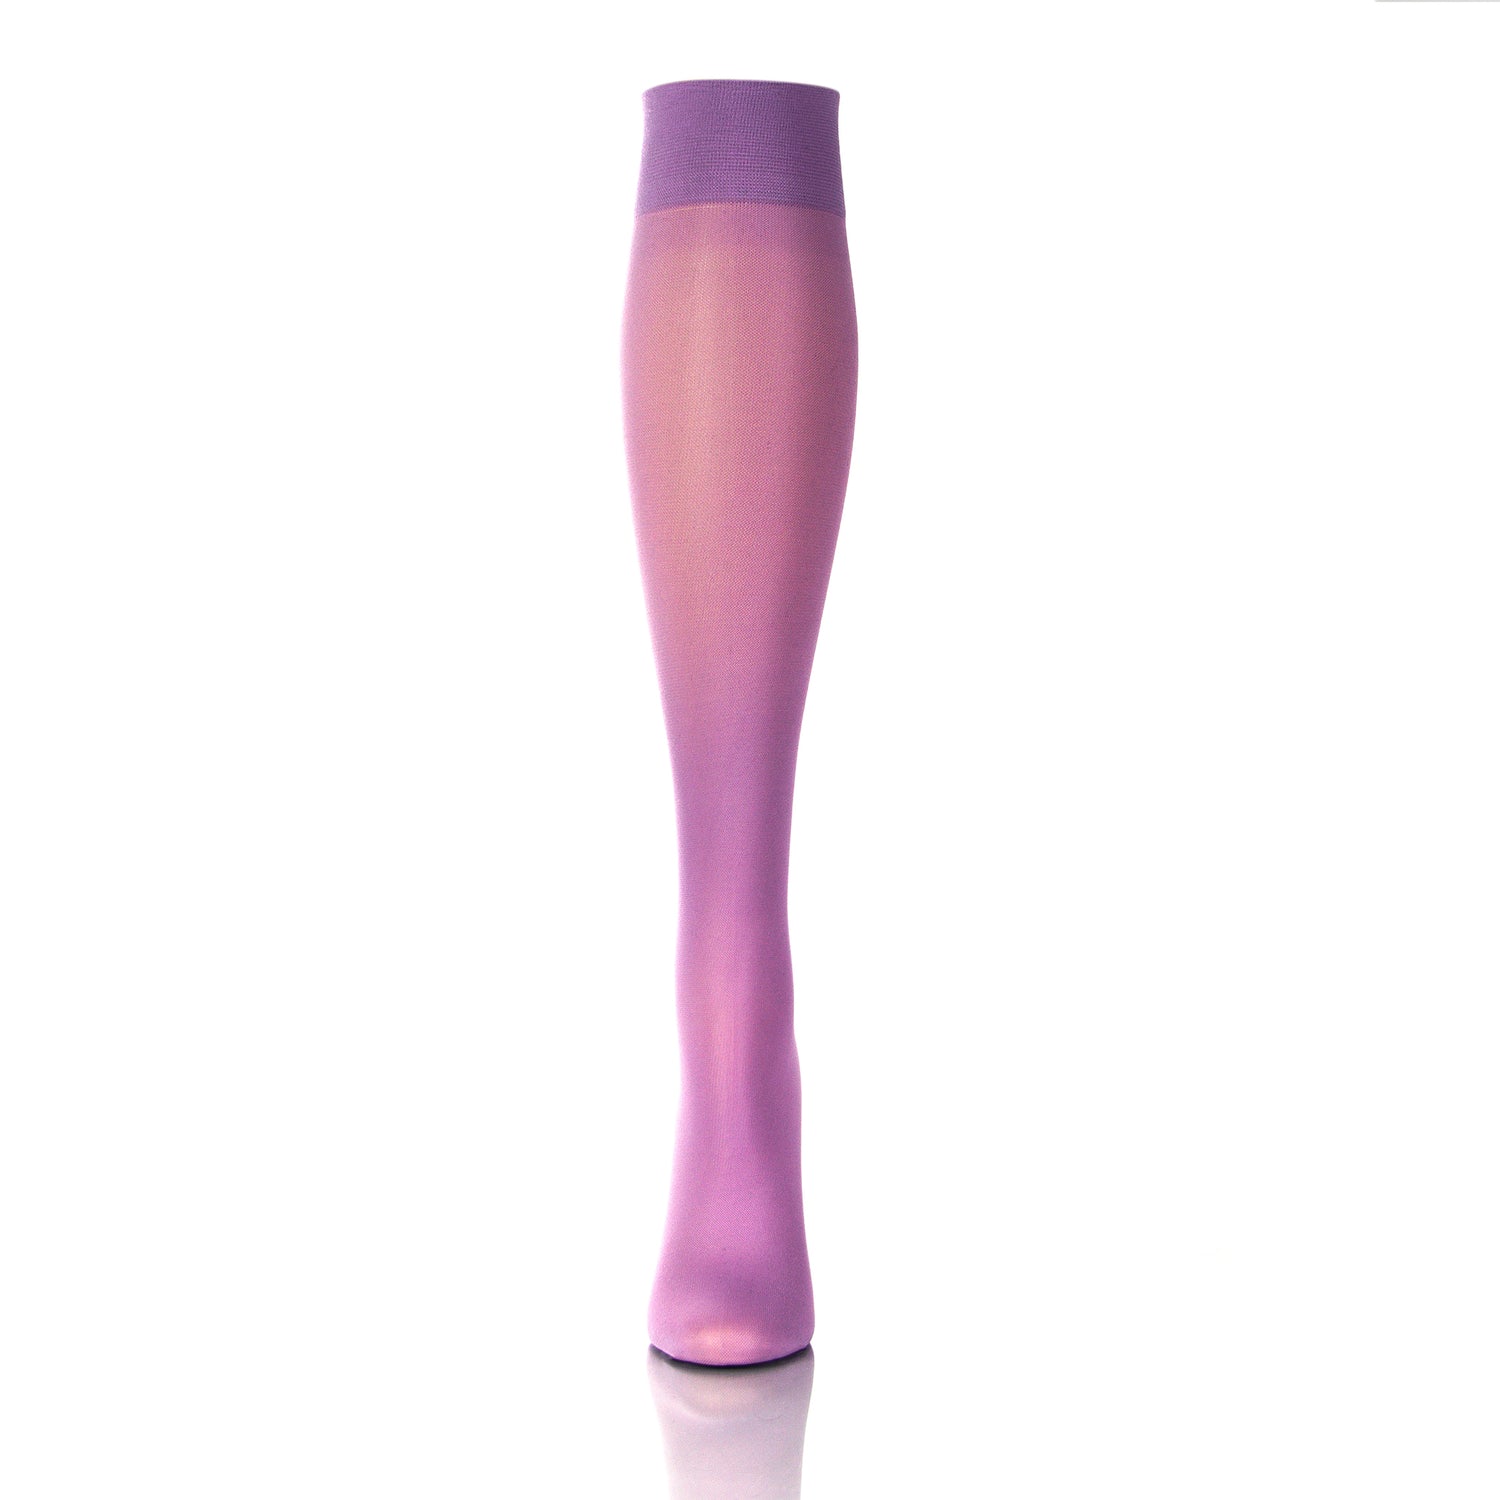 Compression Socks - Women - Coloured - Lavender Color - Doctor Brace Softmedi - Front View